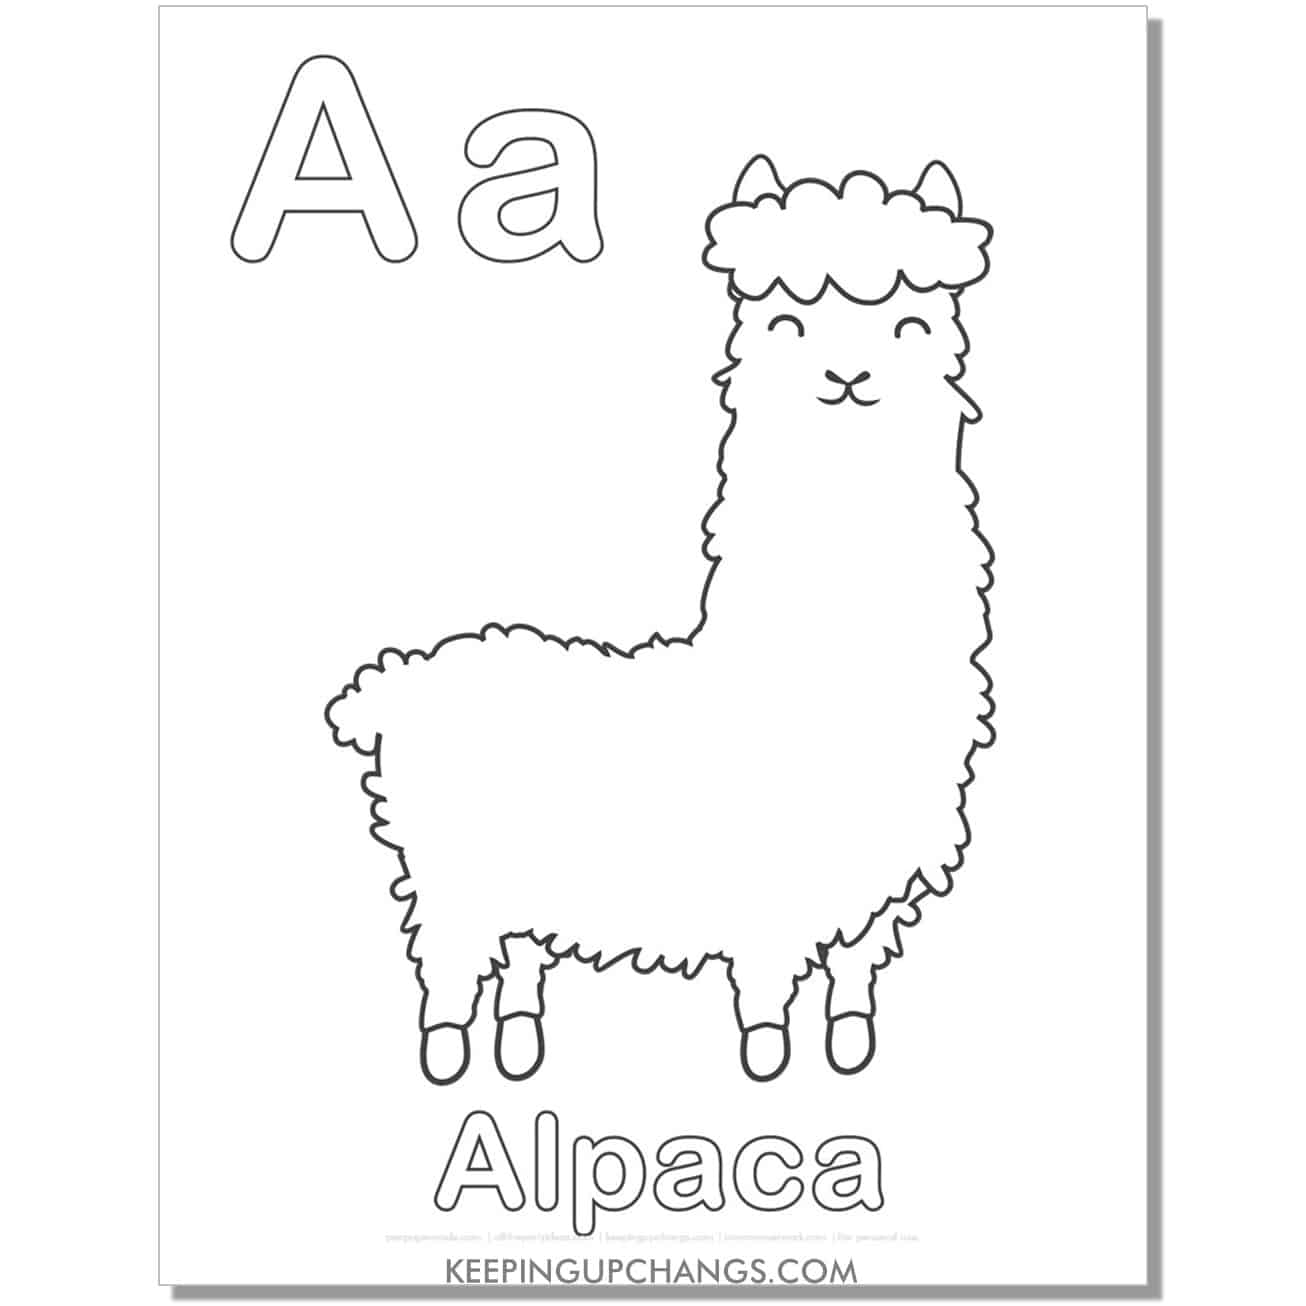 abc coloring sheet, a for alpaca.